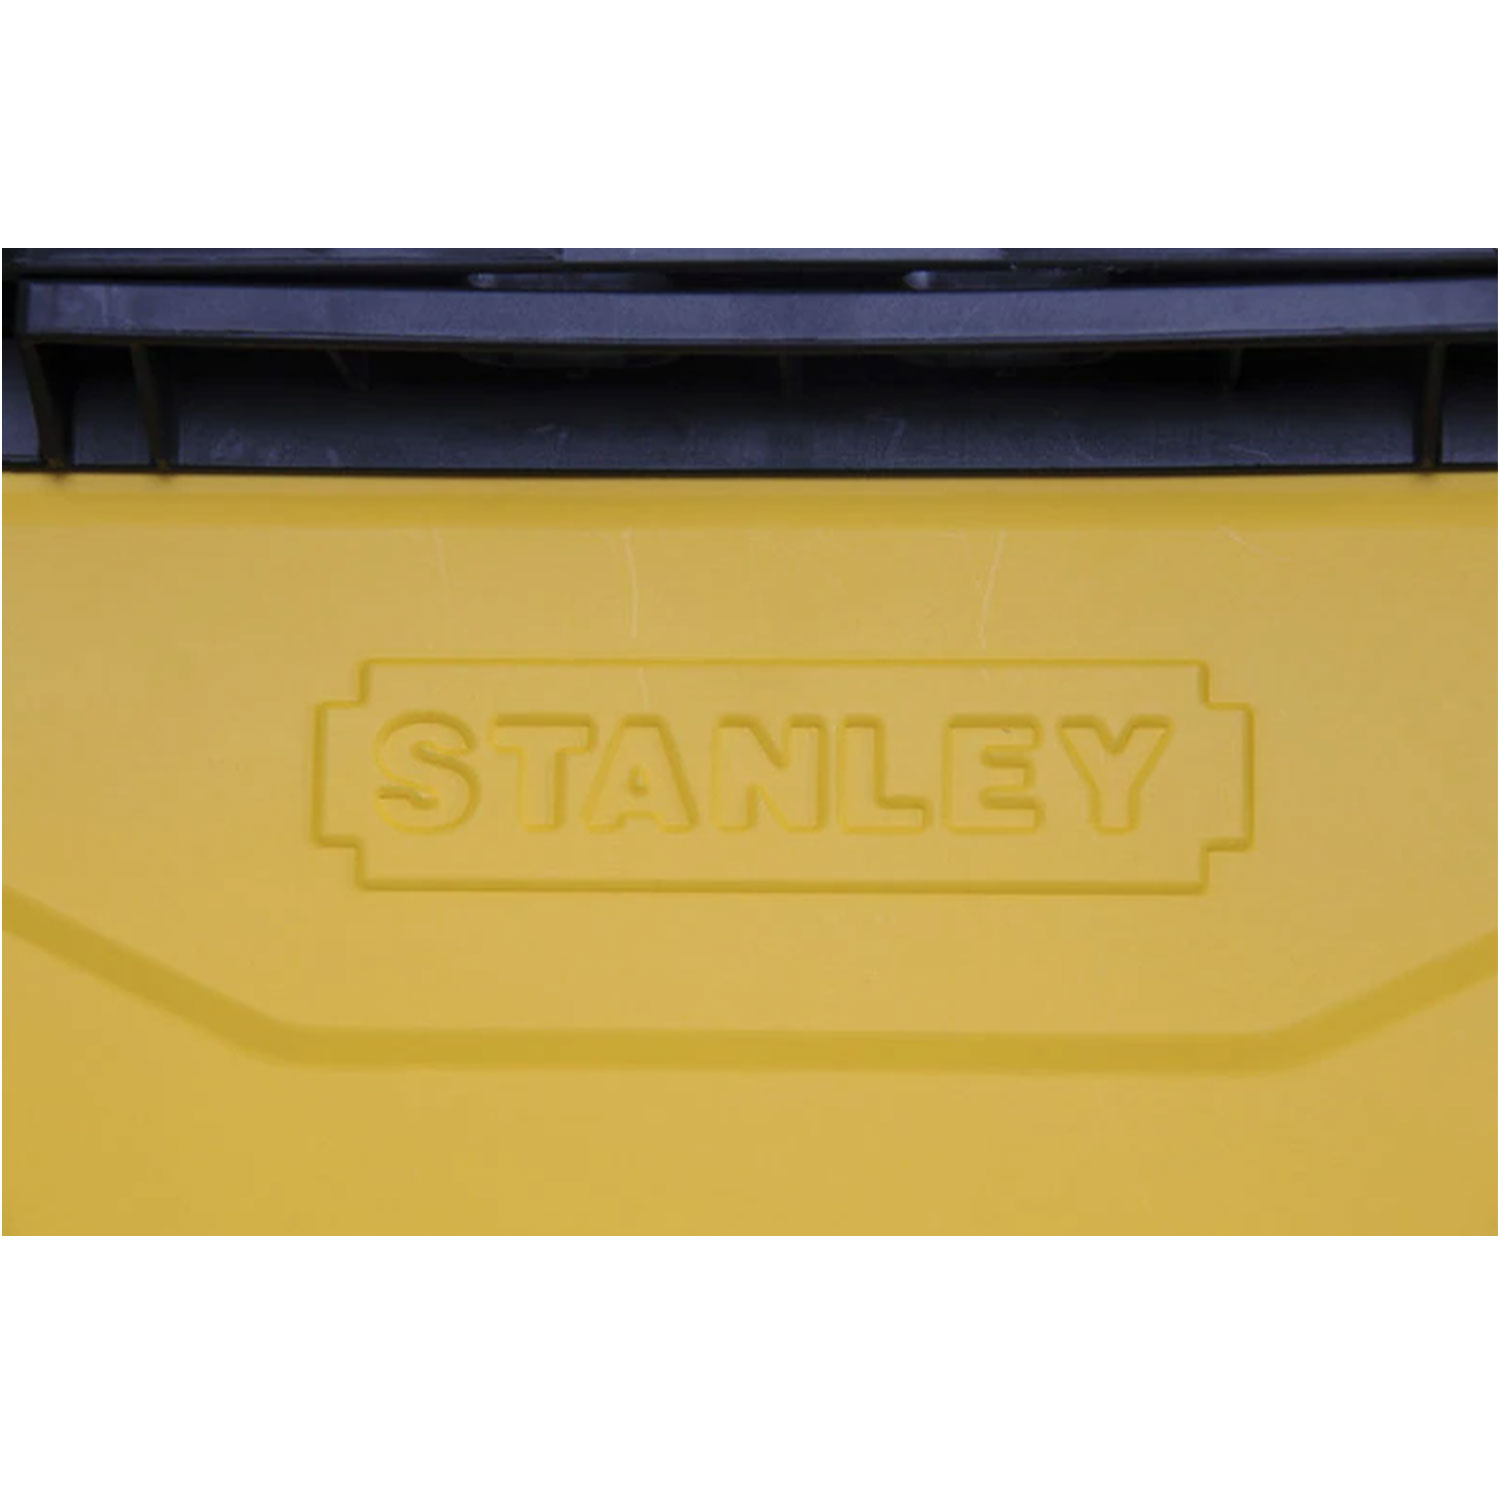 Carrello Stanley 1-95-621 porta utensili in metallo/polipropilene